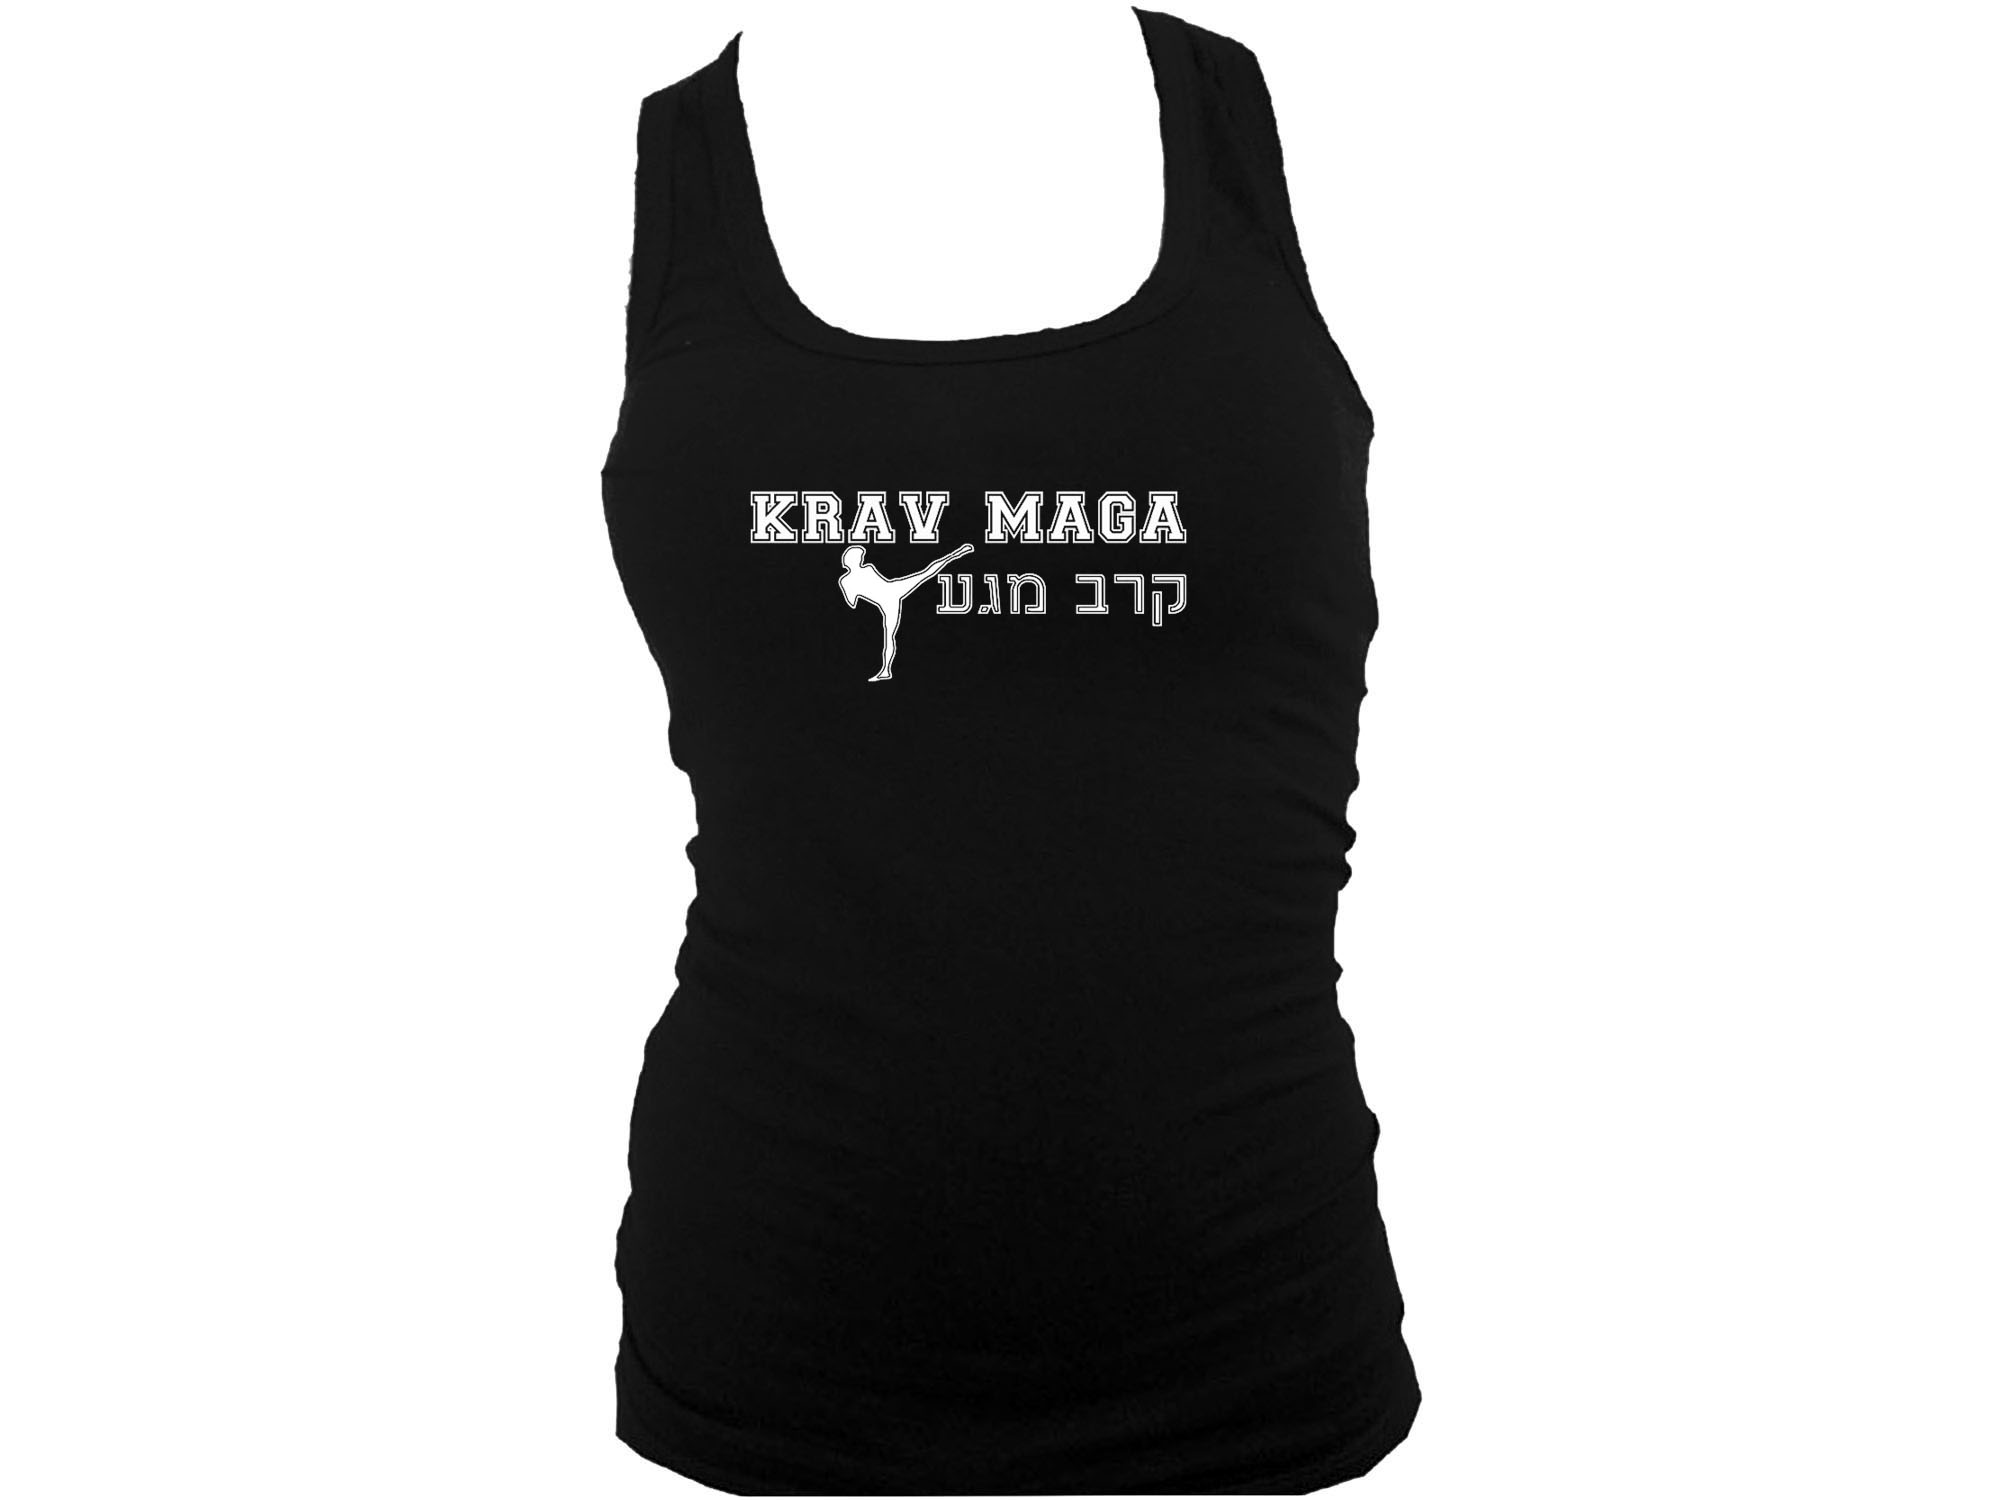 Krav Maga women black tank top S/M